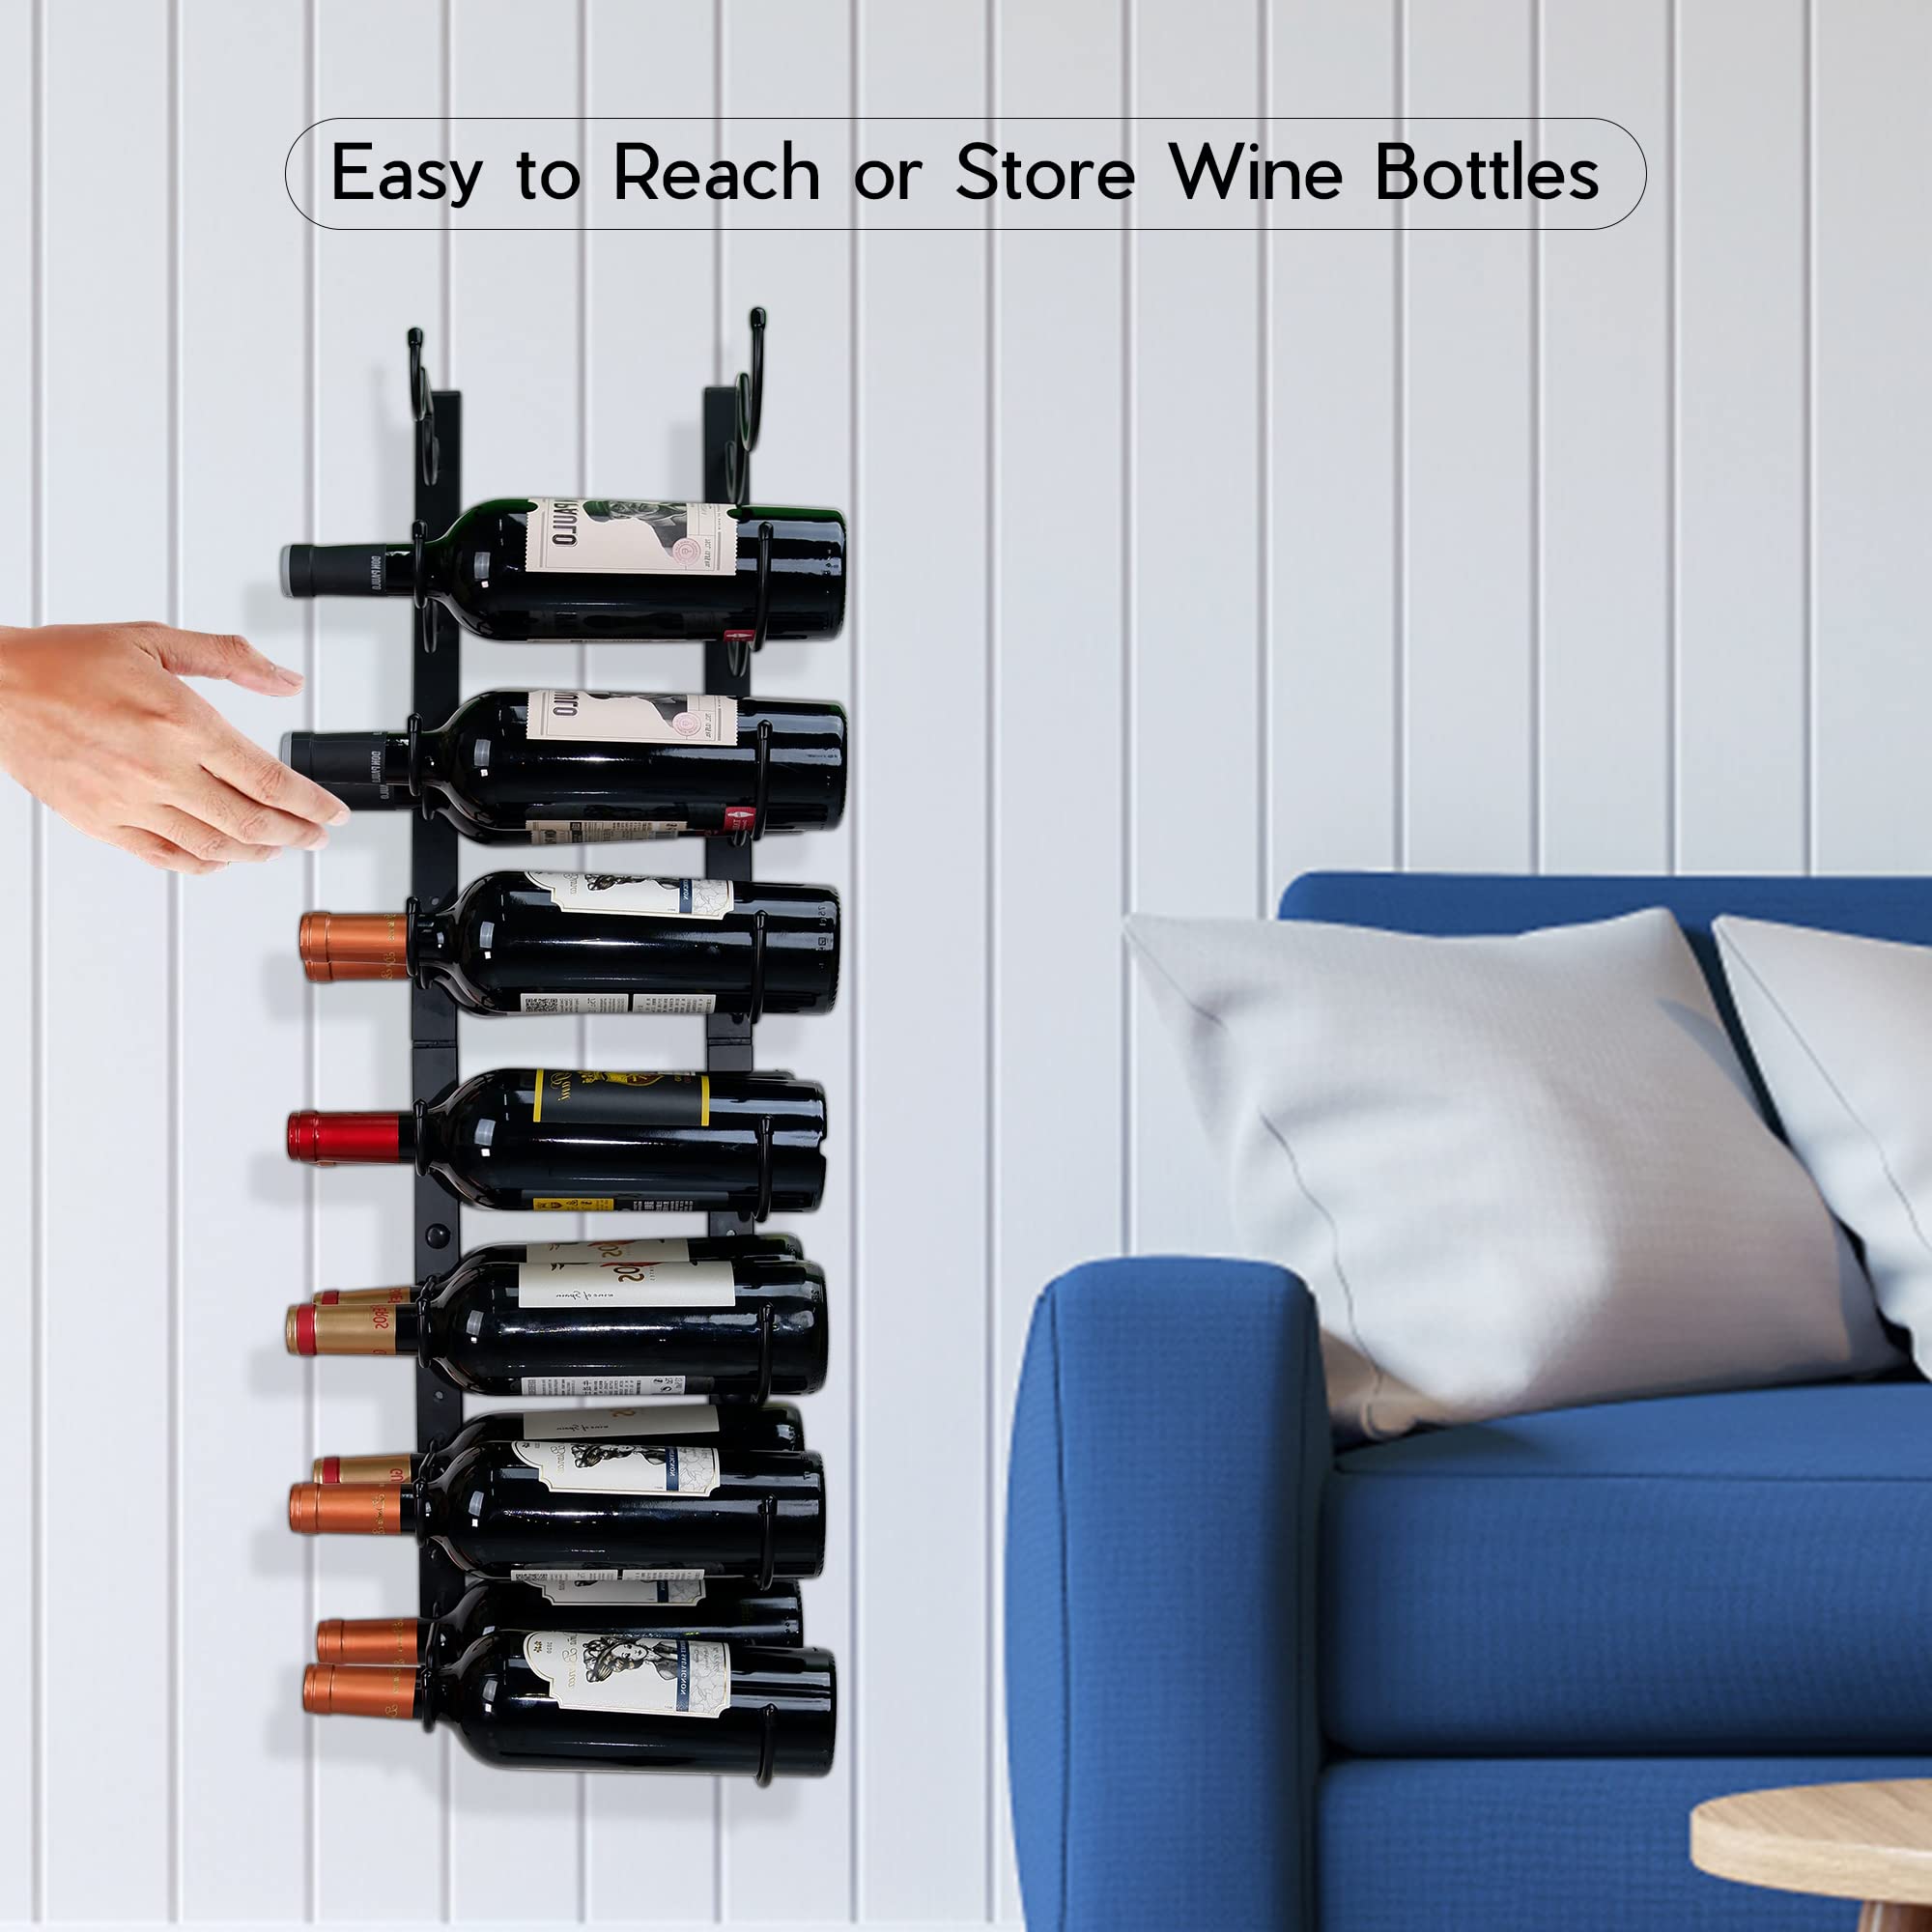 GODGOQGOP Wine Rack Wall Mounted, Wine Bottle Holder for 16 Bottles, Metal Hanging Wine Bottle Holder,Freely Spliceable Wall Wine Rack for Kitchen Pantry Bar Wine Cellar